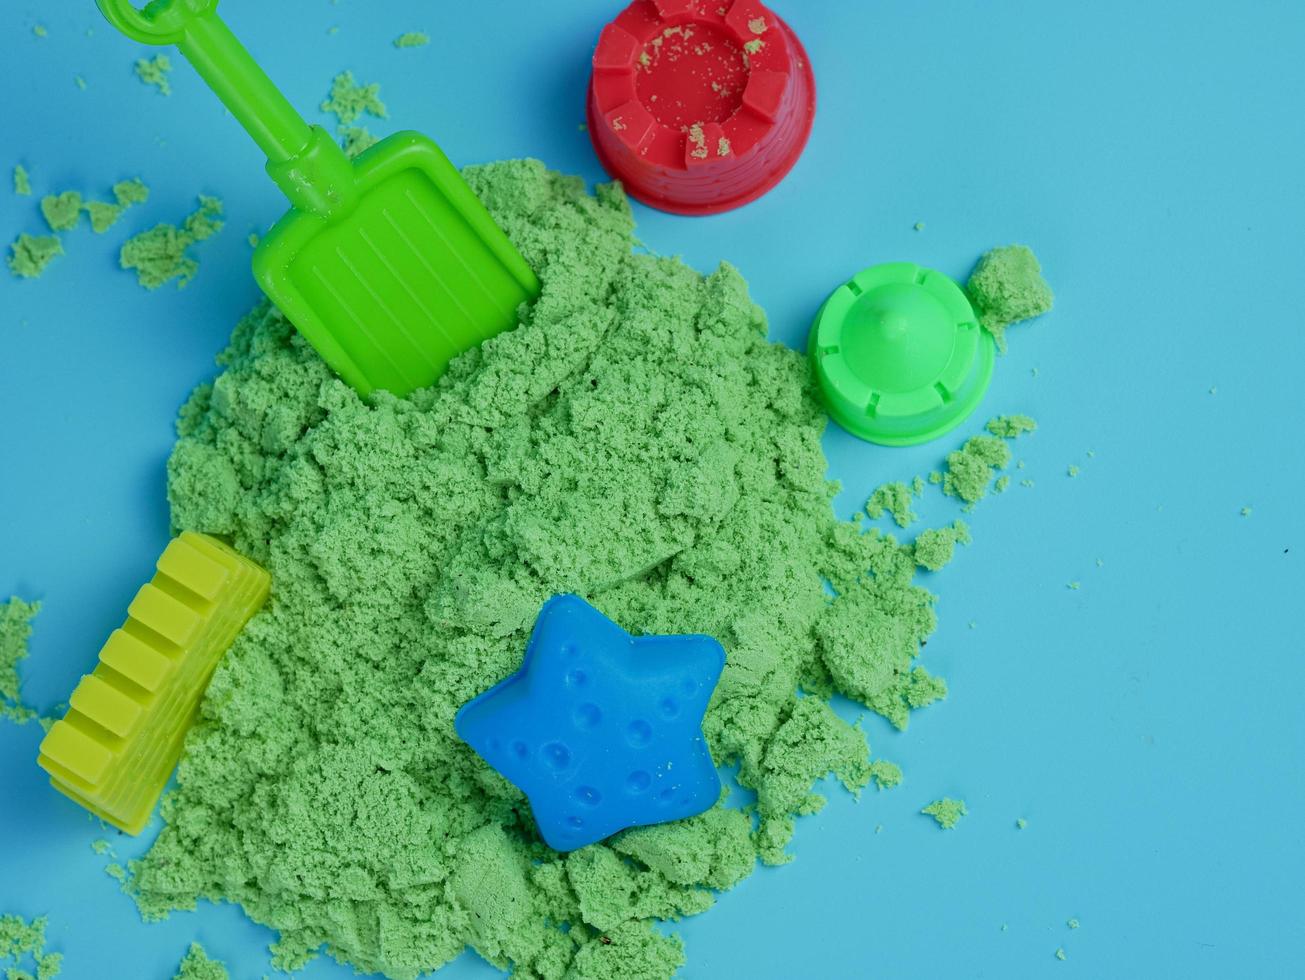 juego de juguetes de arena verde e impresiones aisladas sobre fondo azul foto